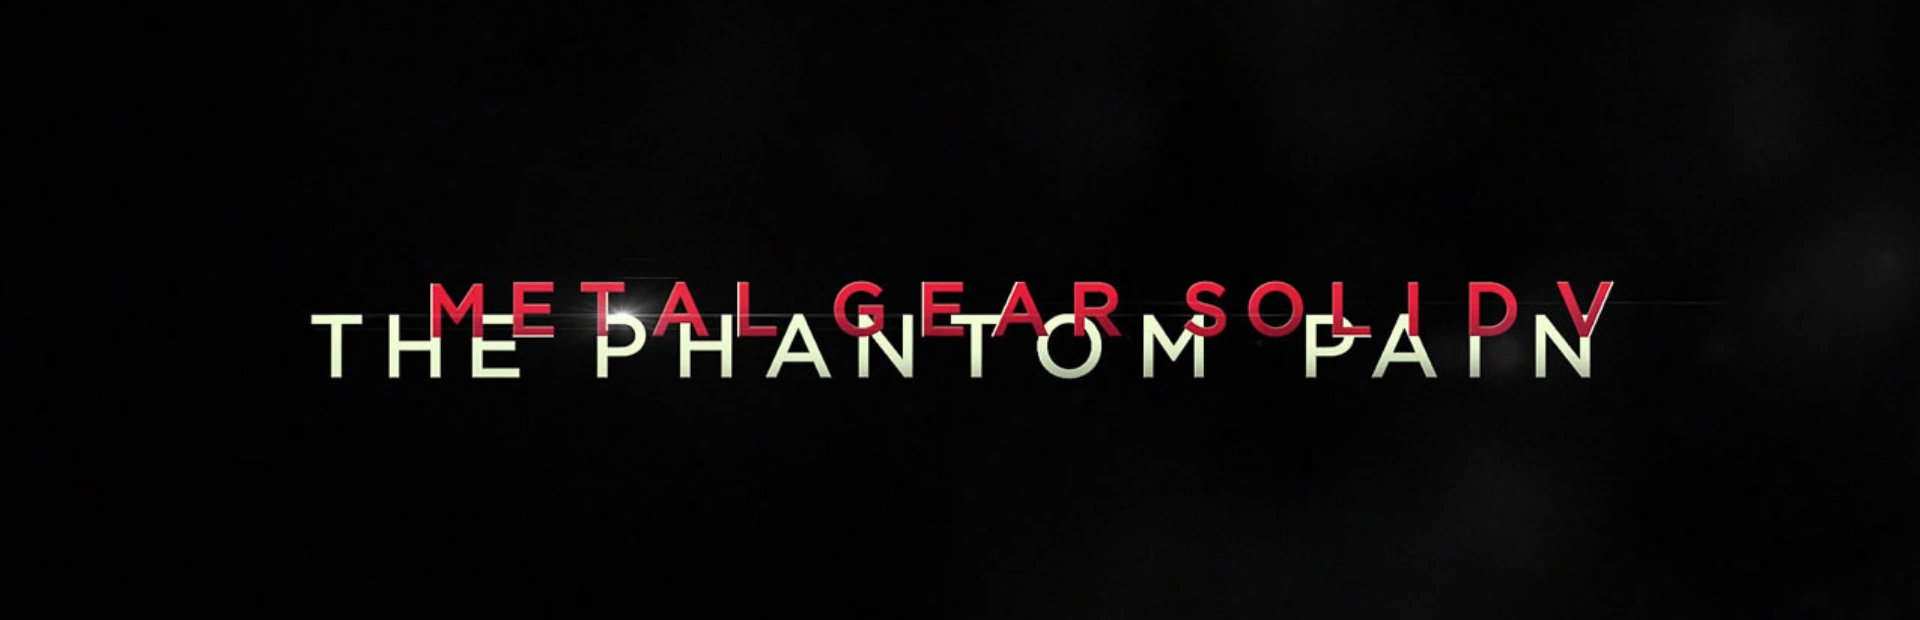 Metal Gear Solid V The Phantom Pain.banner2